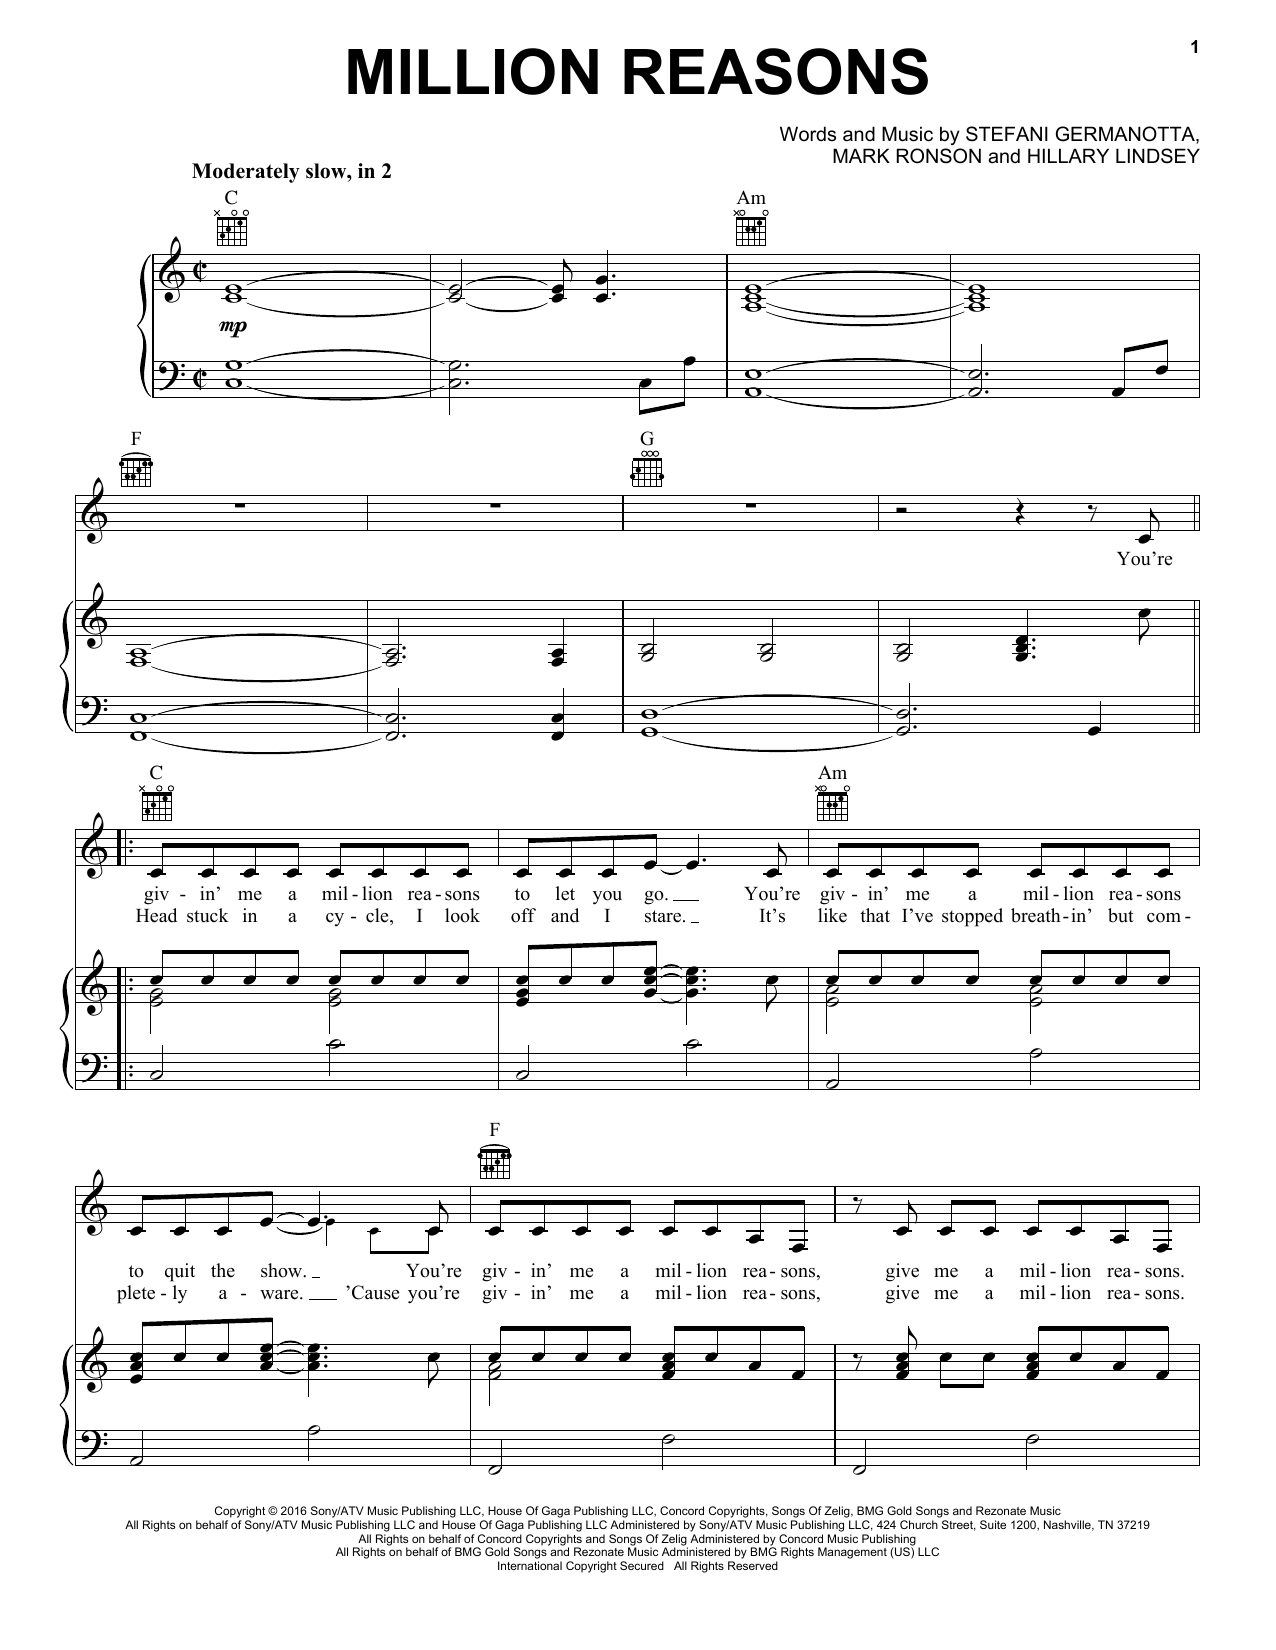 Lady Gaga Million Reasons Sheet Music Notes & Chords for VPROPG - Download or Print PDF